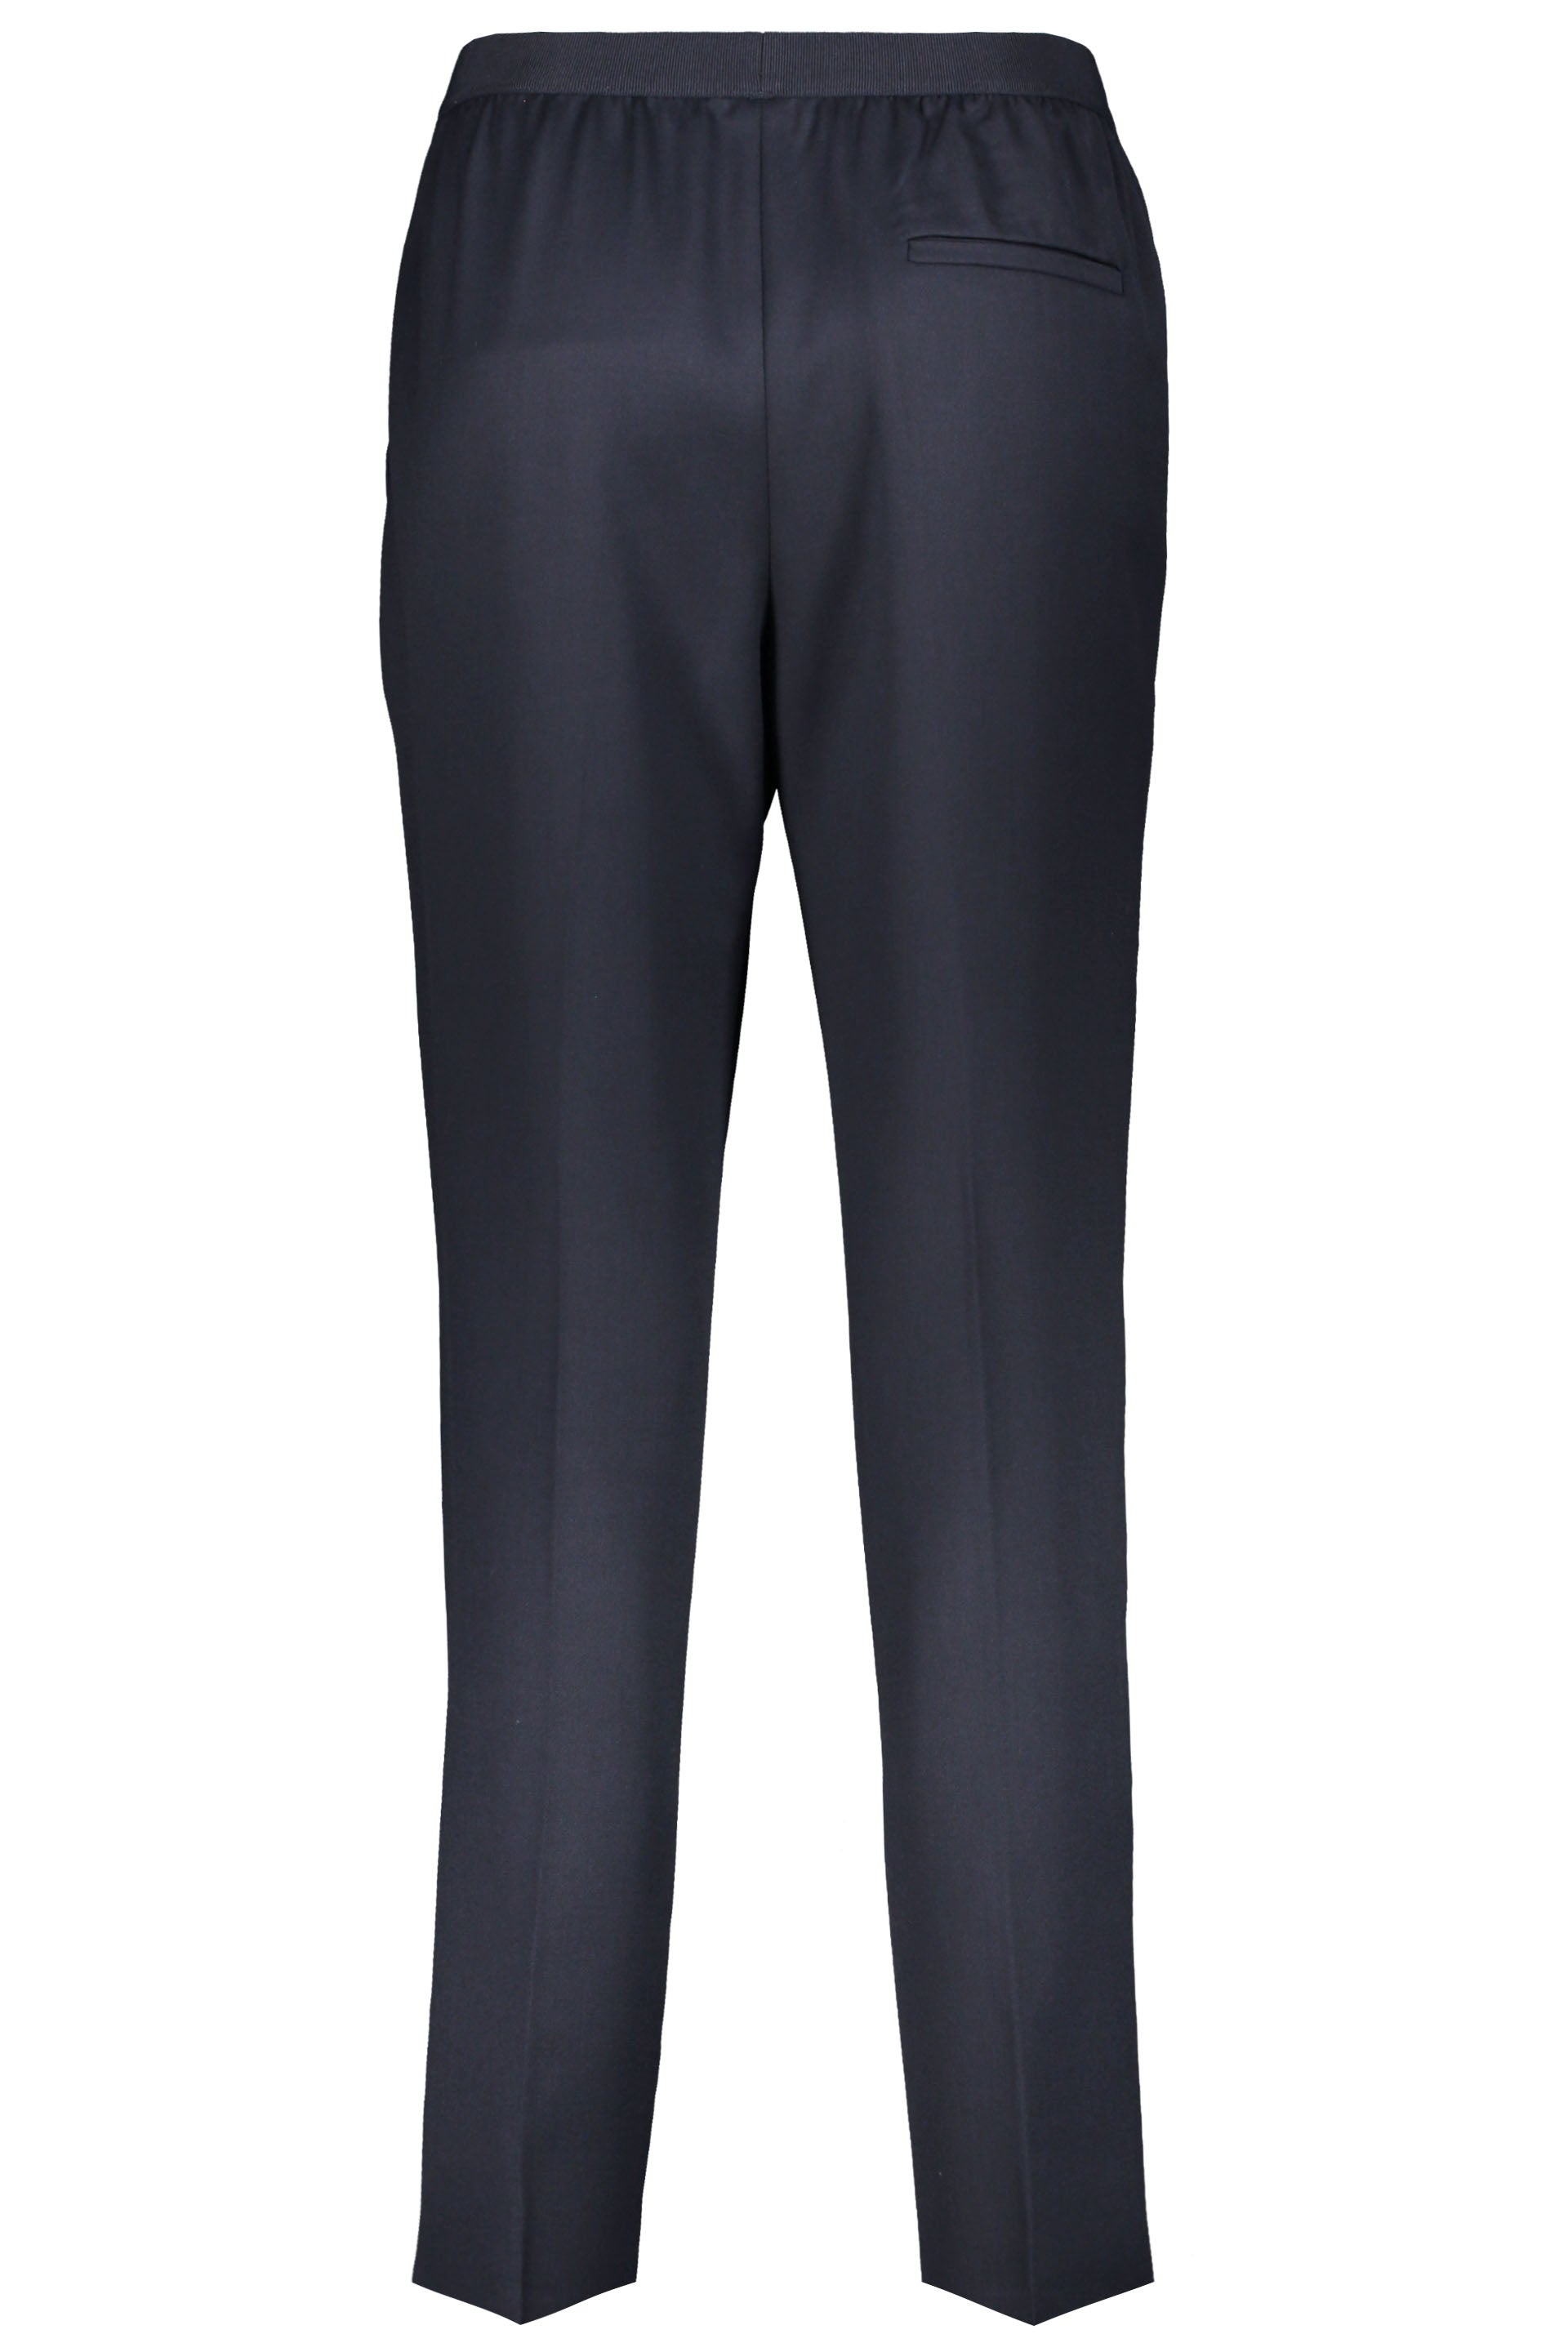 Agnona-OUTLET-SALE-Wool-blend-trousers-Hosen-ARCHIVE-COLLECTION-2.jpg